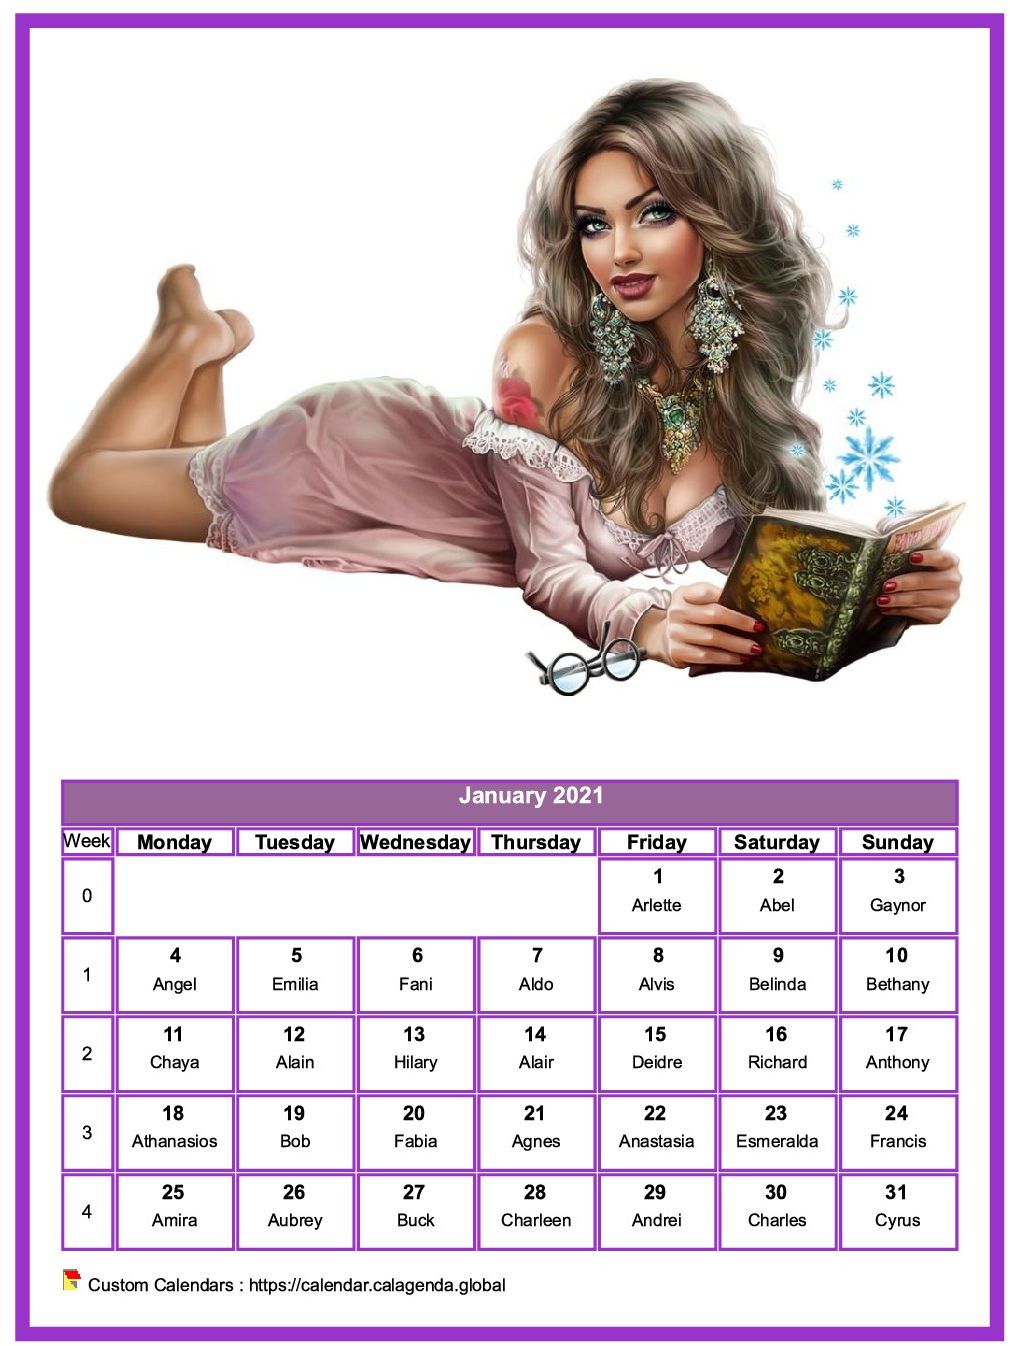 Calendar January 2021 women